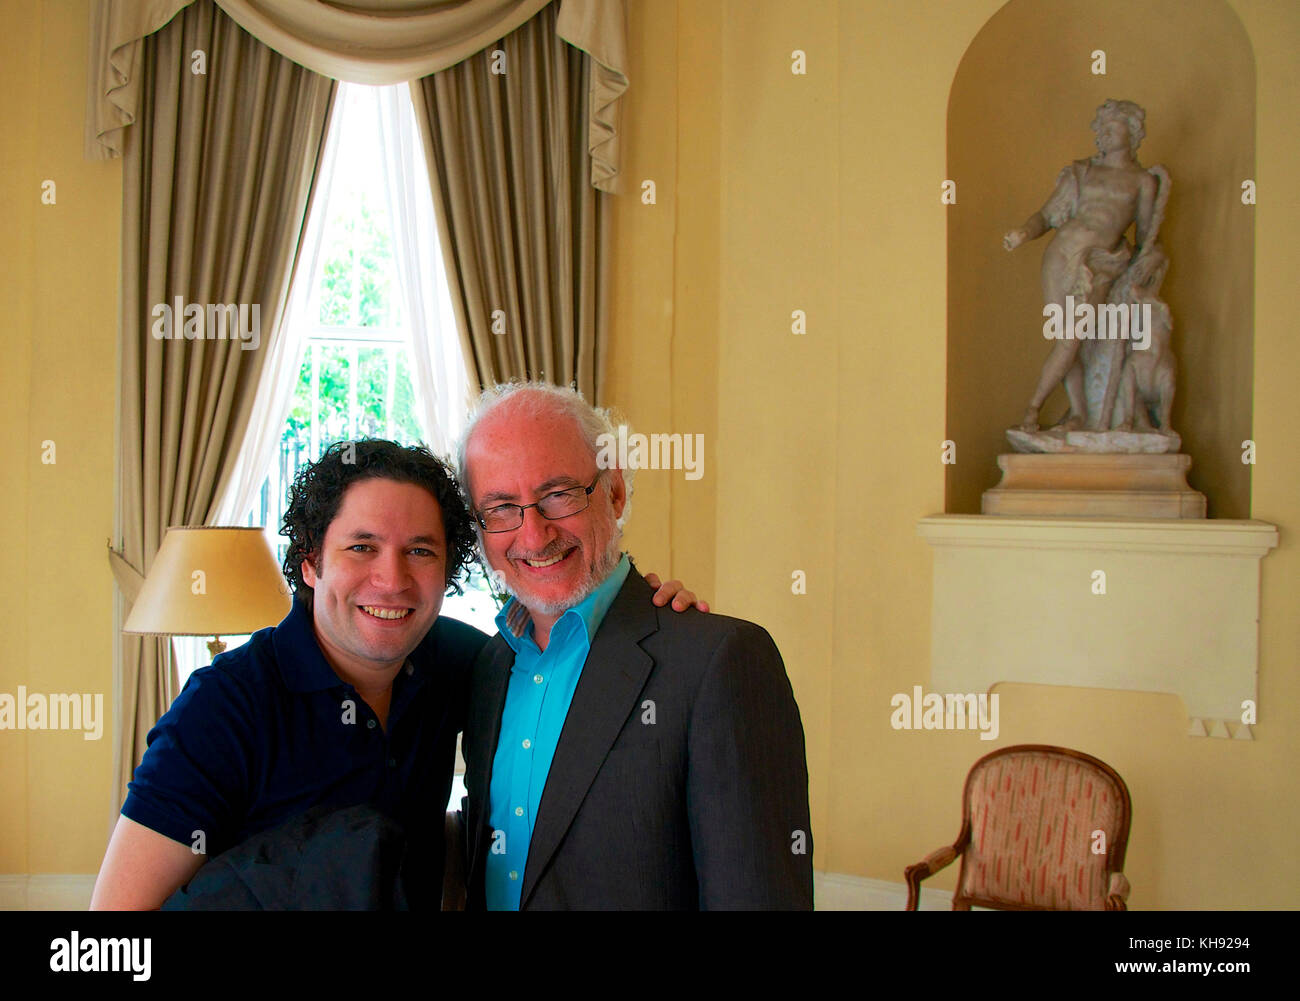 Die lebrecht Interview, Juni 2012 (Radio 3). Norman Lebrecht Interviews (Venezolanische Dirigent Gustavo Dudamel) in London. Stockfoto